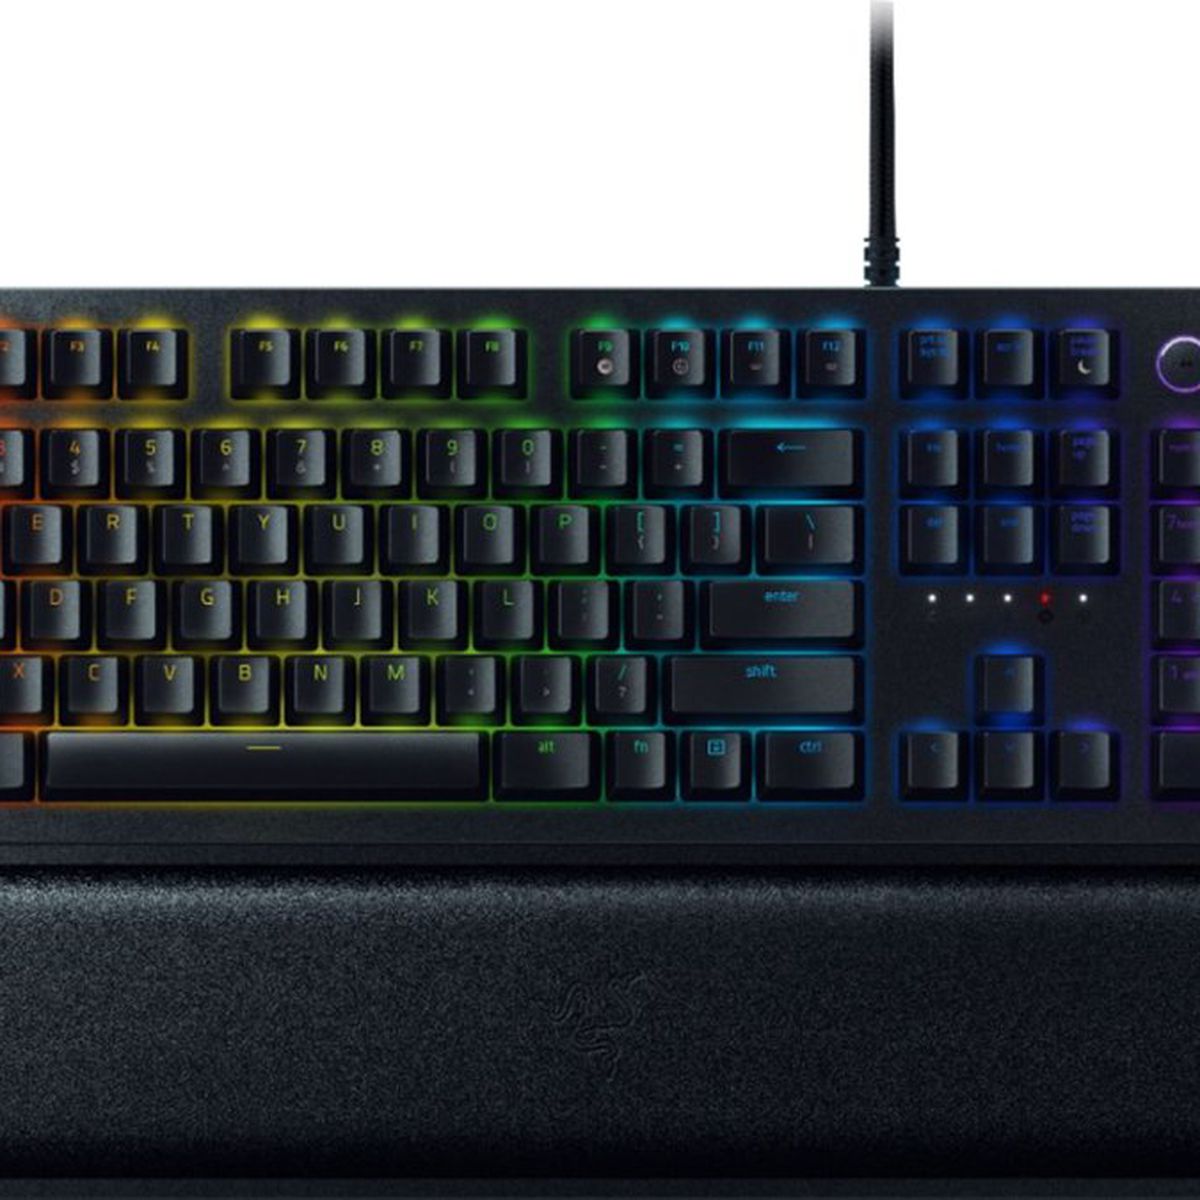 A product shot of the Razer Huntsman Elite gaming keyboard